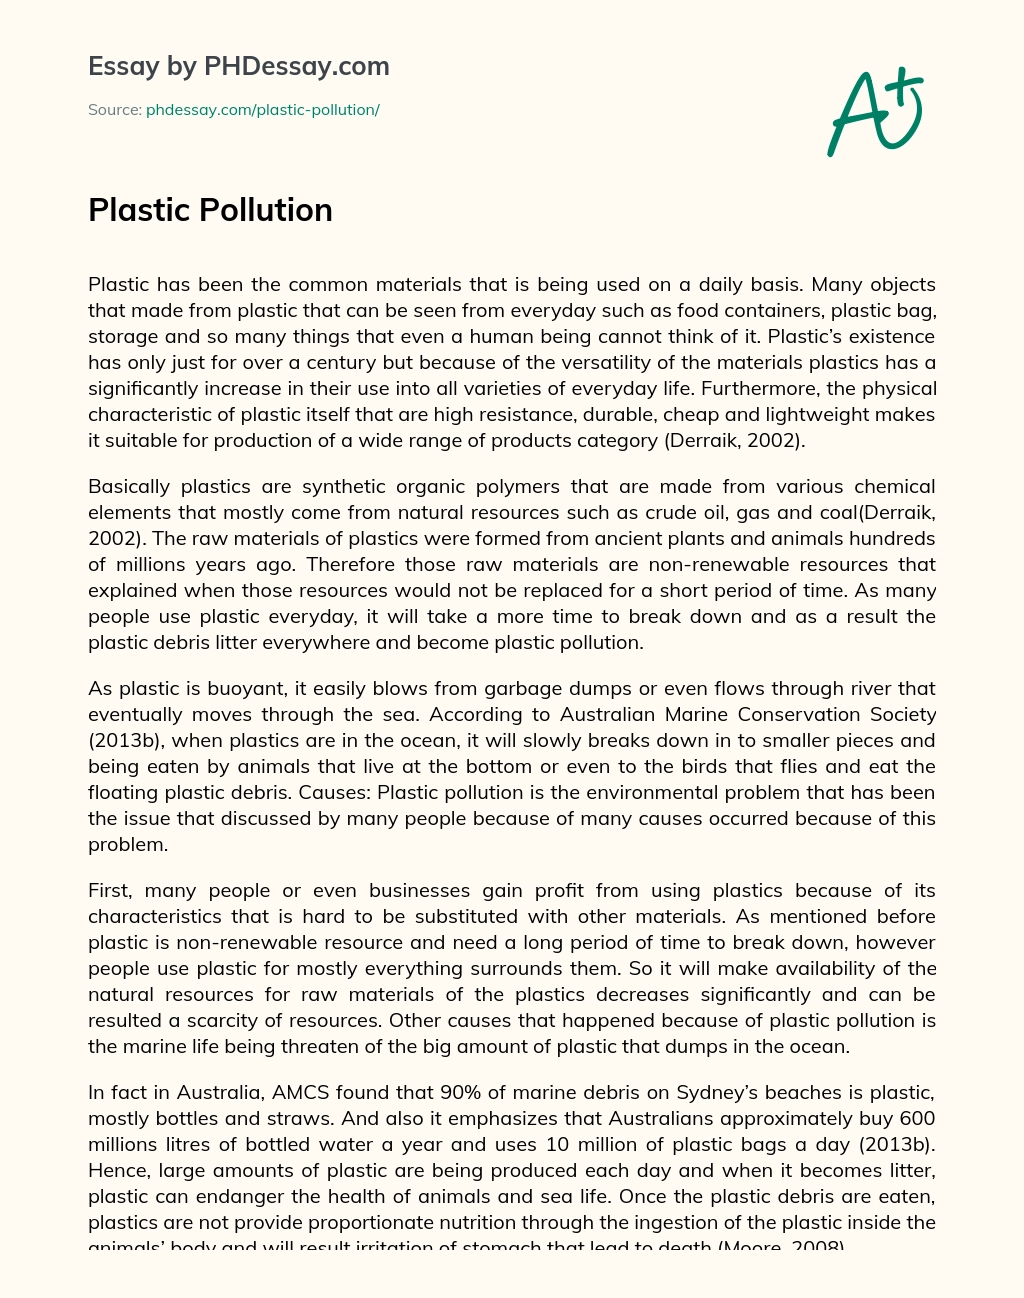 Plastic Pollution essay